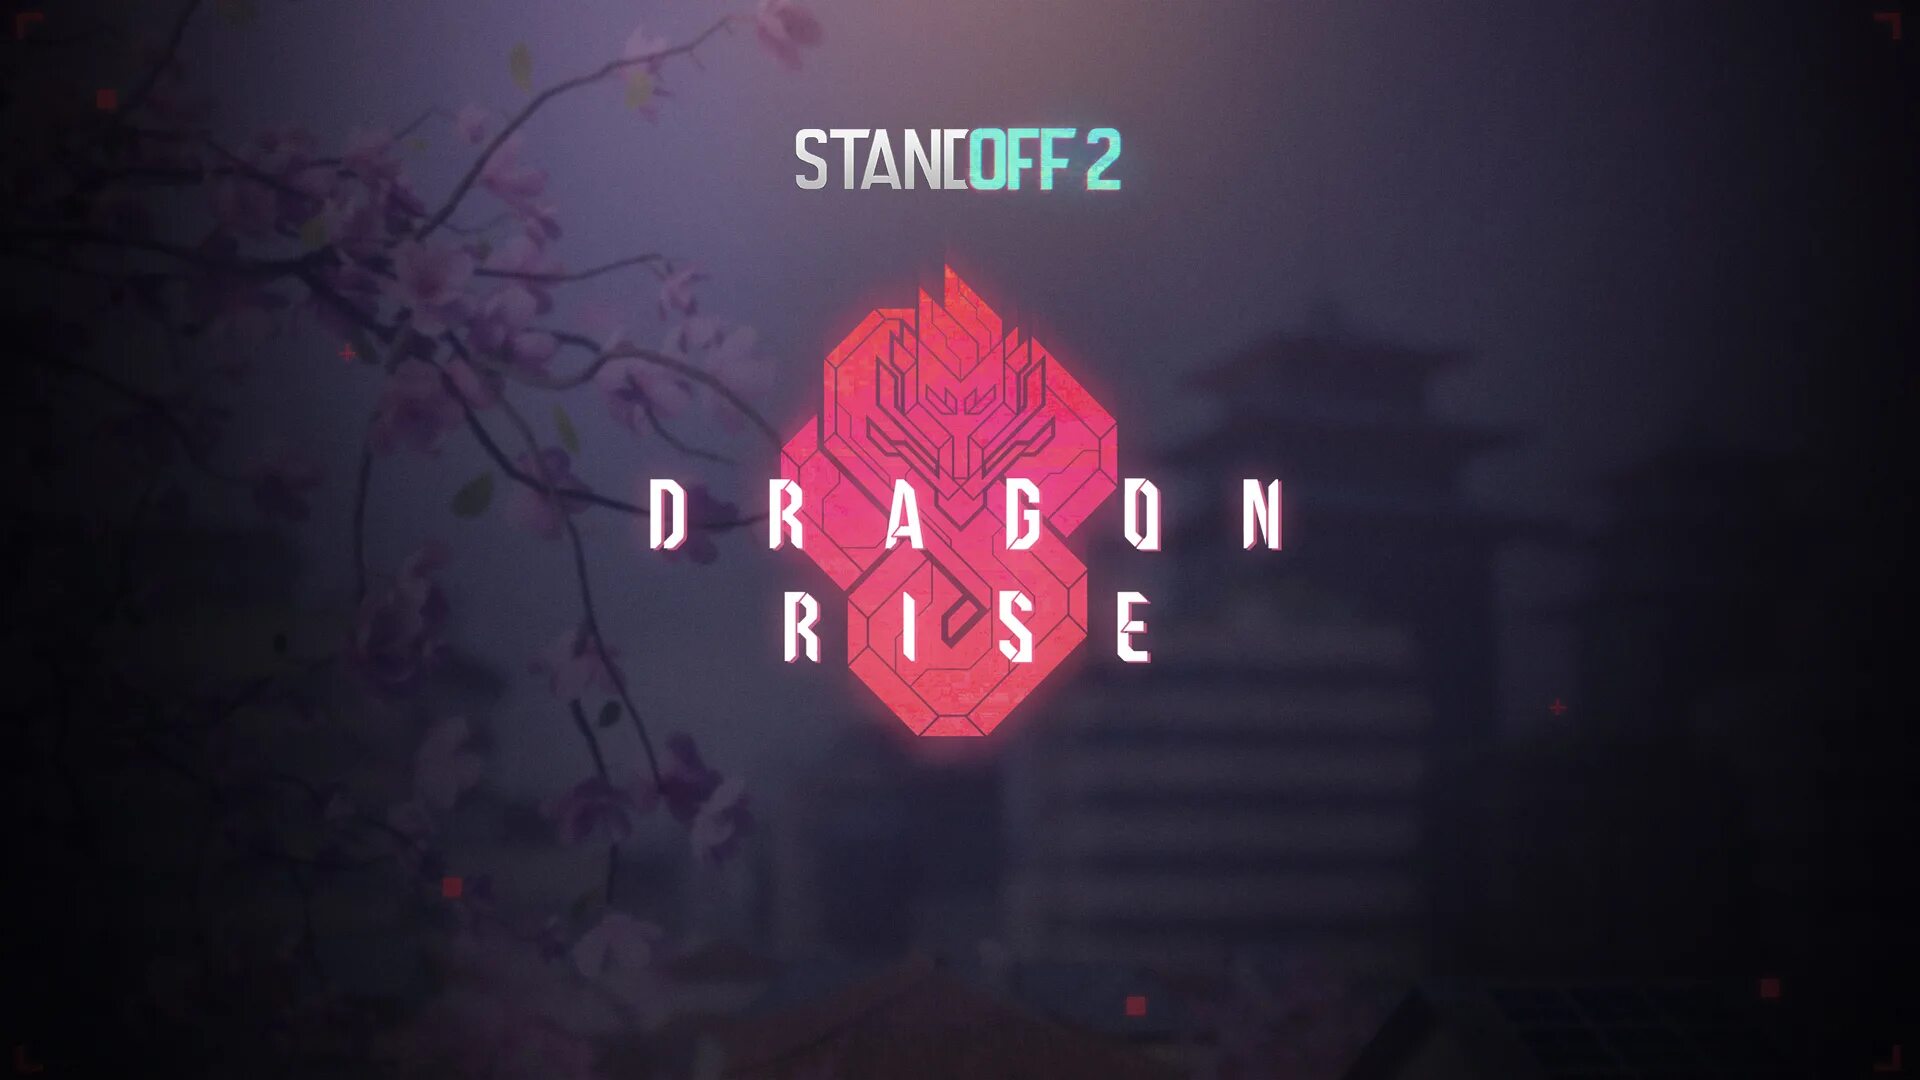 Стандофф 0.25 0. Медали Standoff 2 Dragon Rise. Стандофф 0.23.0. Dragon Rise Standoff 2.